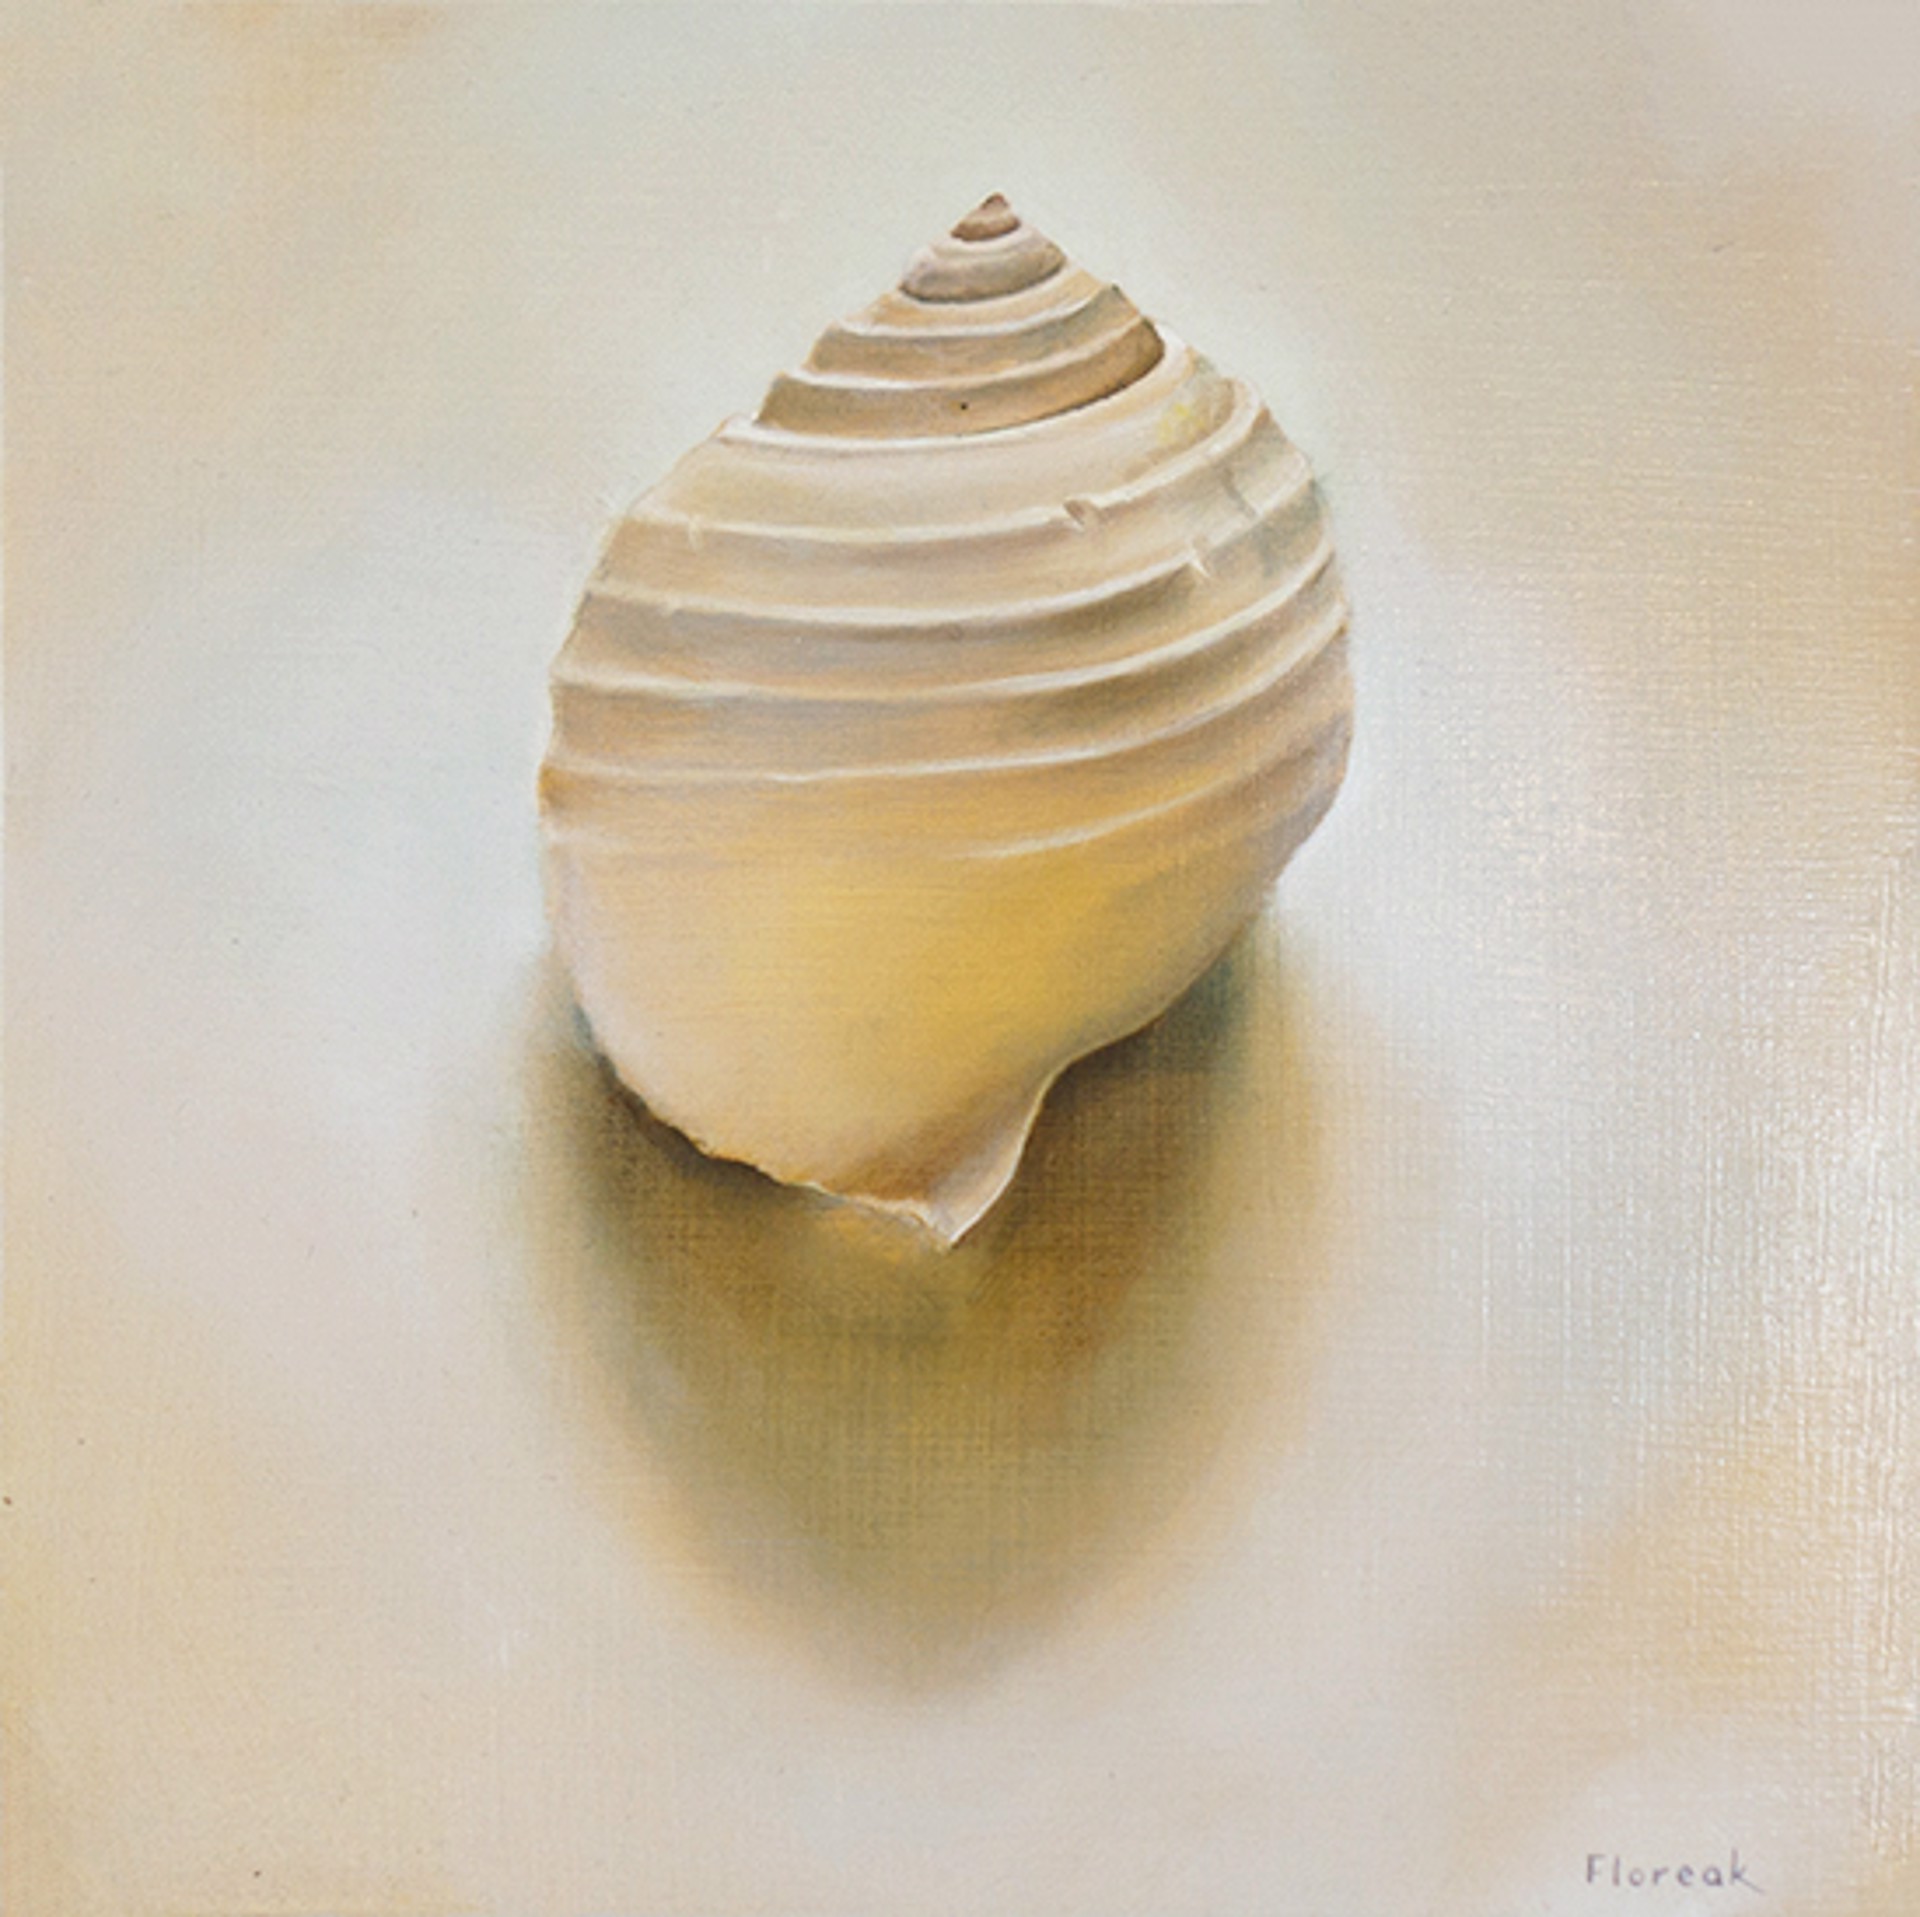 White Shell by Ida Floreak